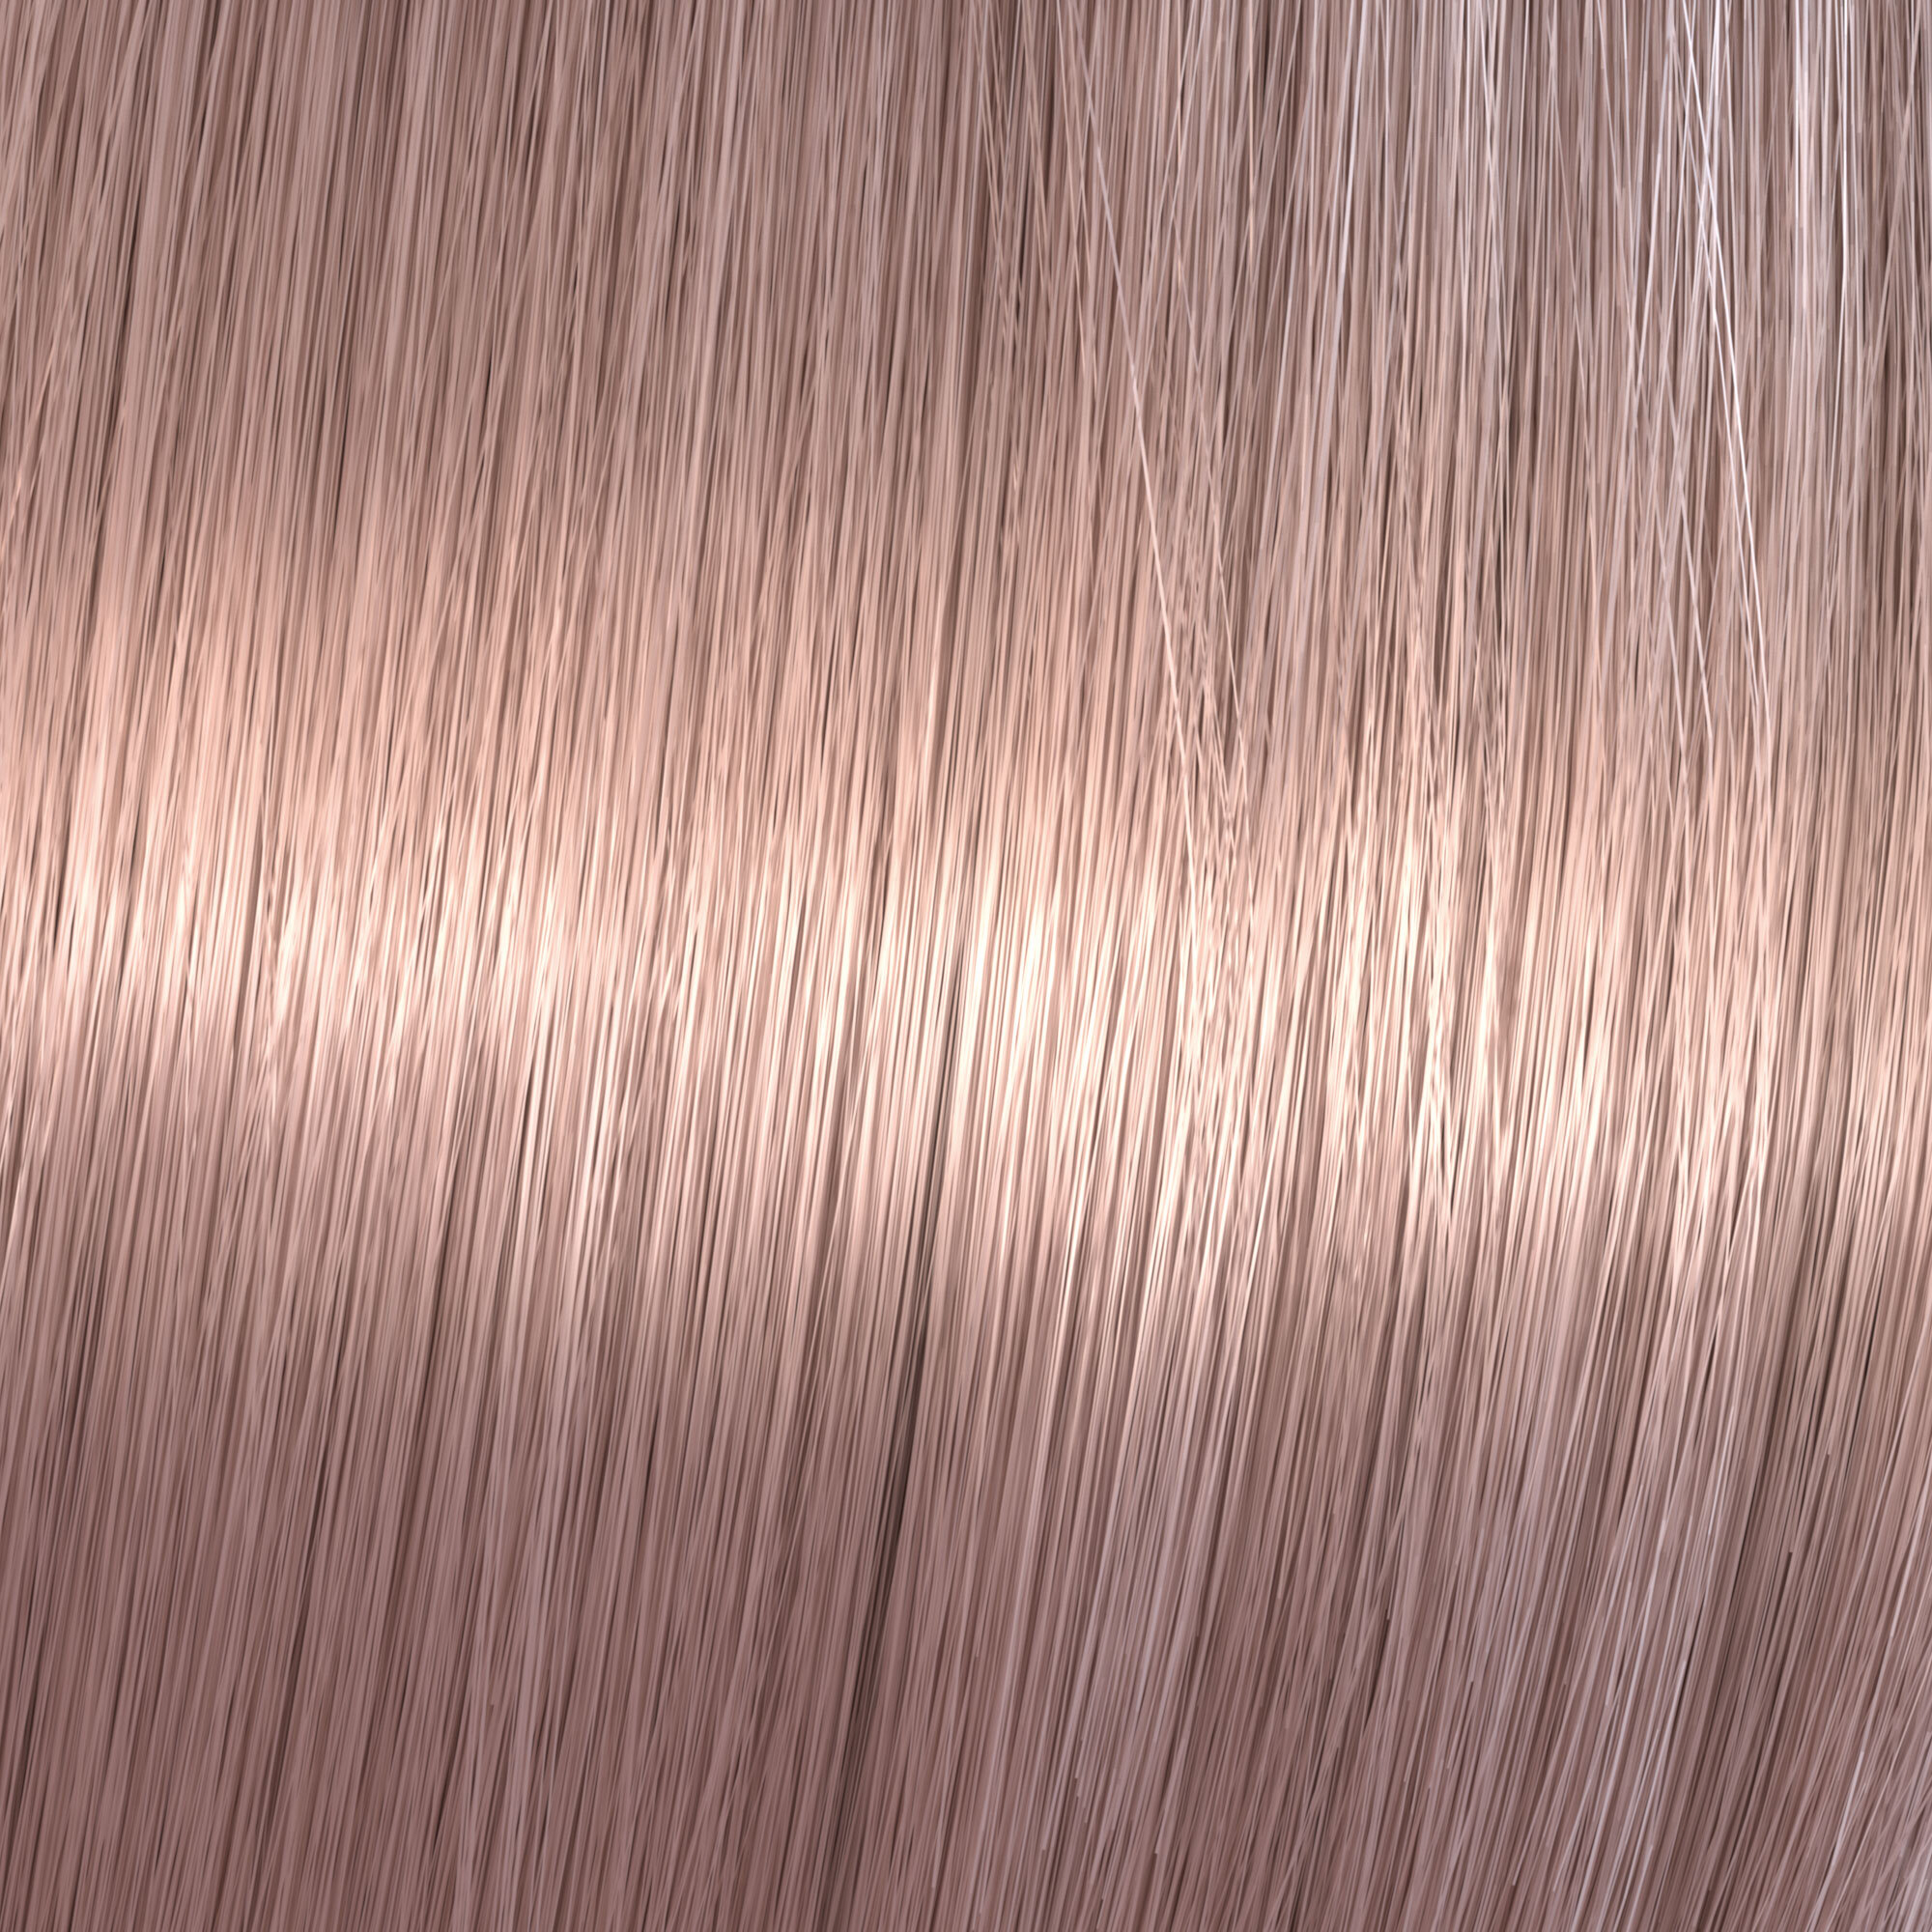 Wella Shinefinity Color Glaze - 07/75 Medium Blonde Brown Mahogany